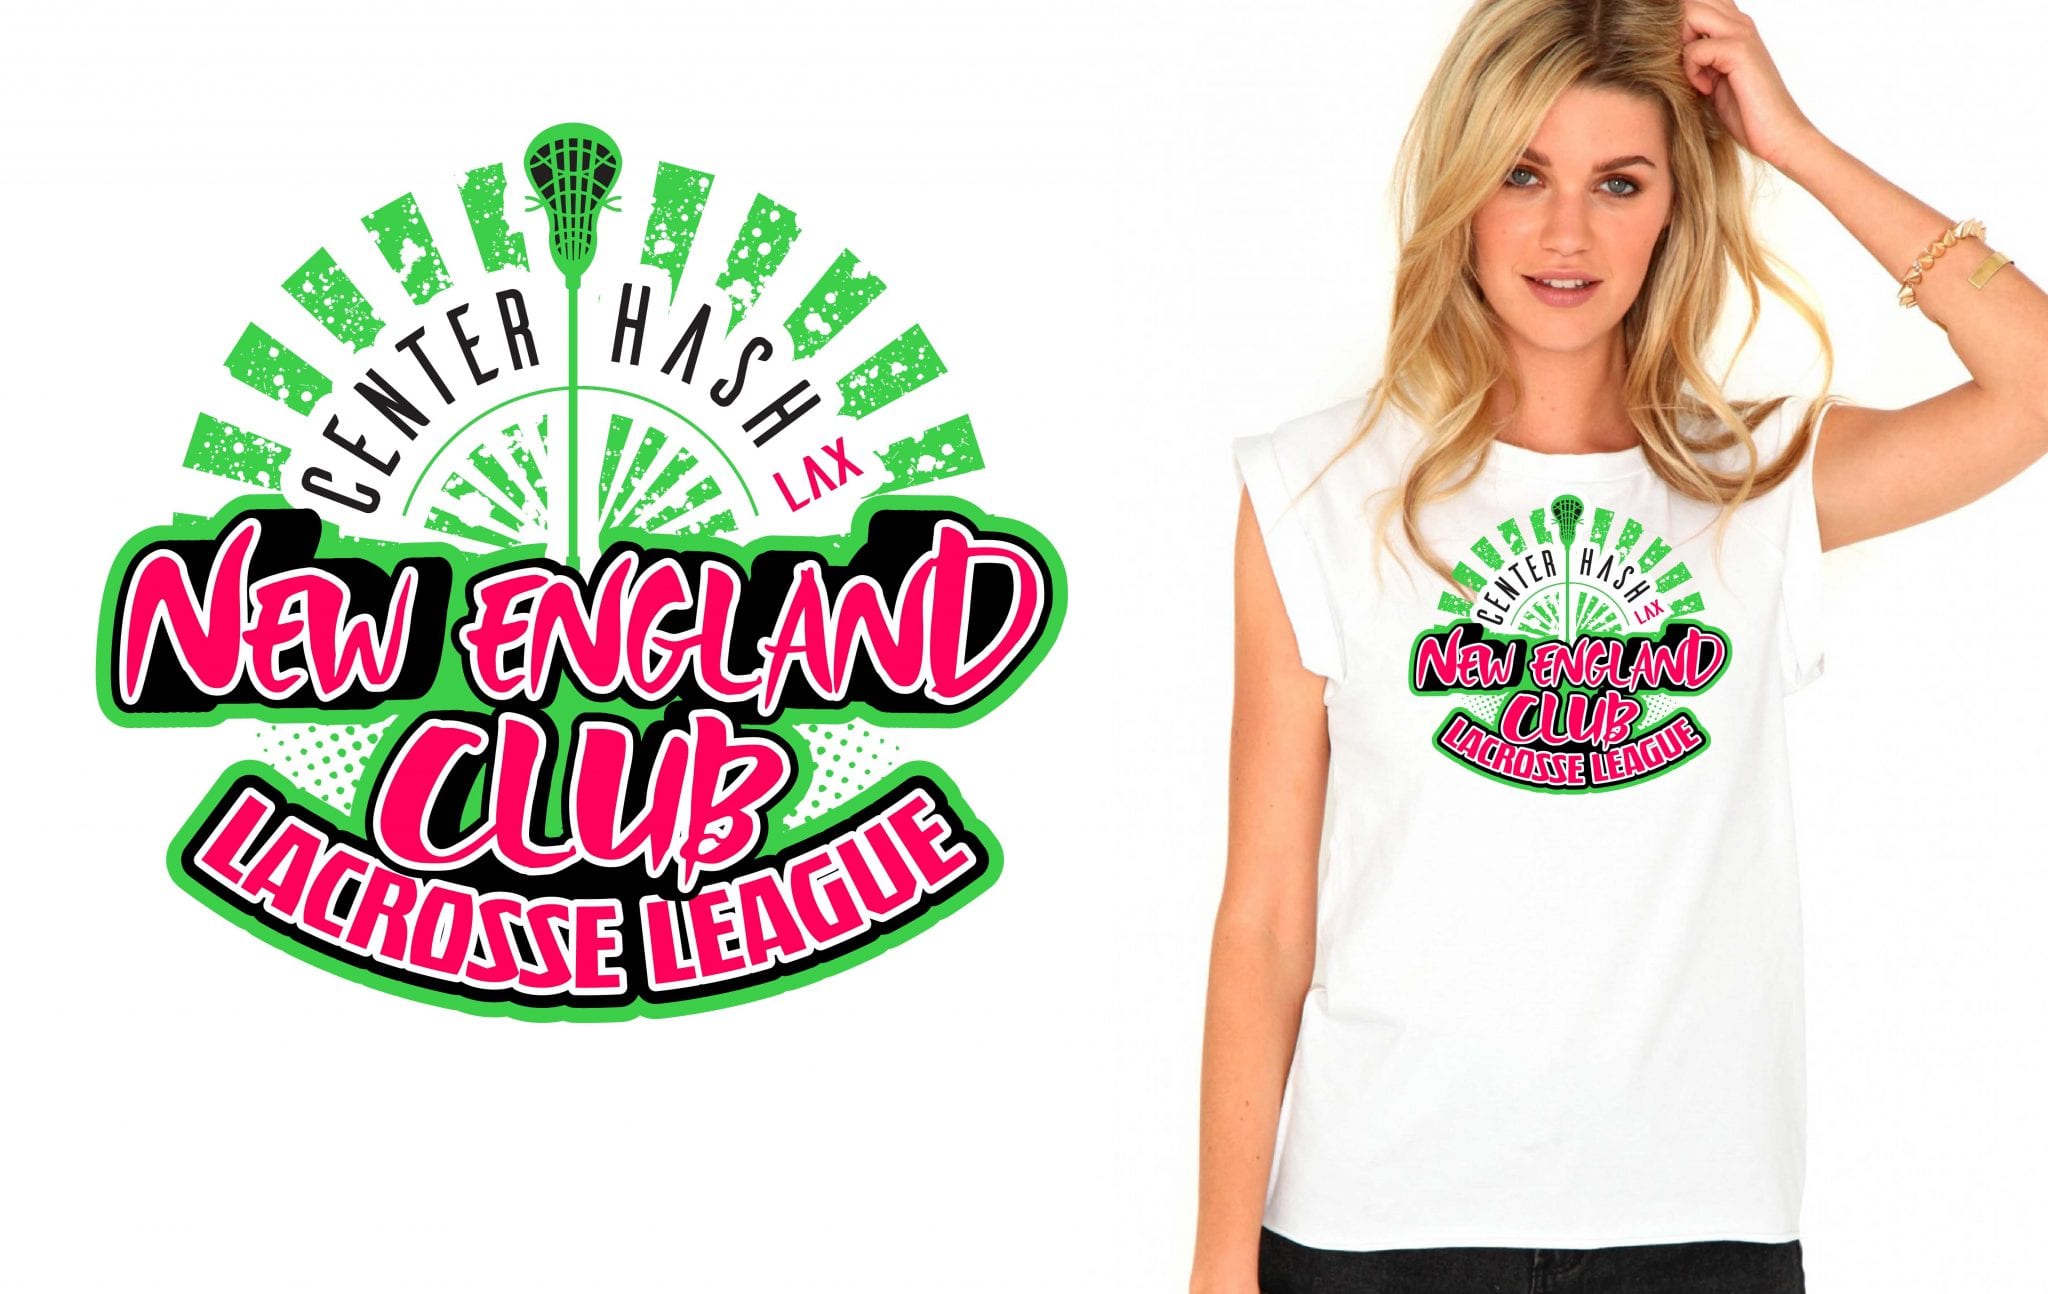 New England Club Lacrosse League awesome tshirt design